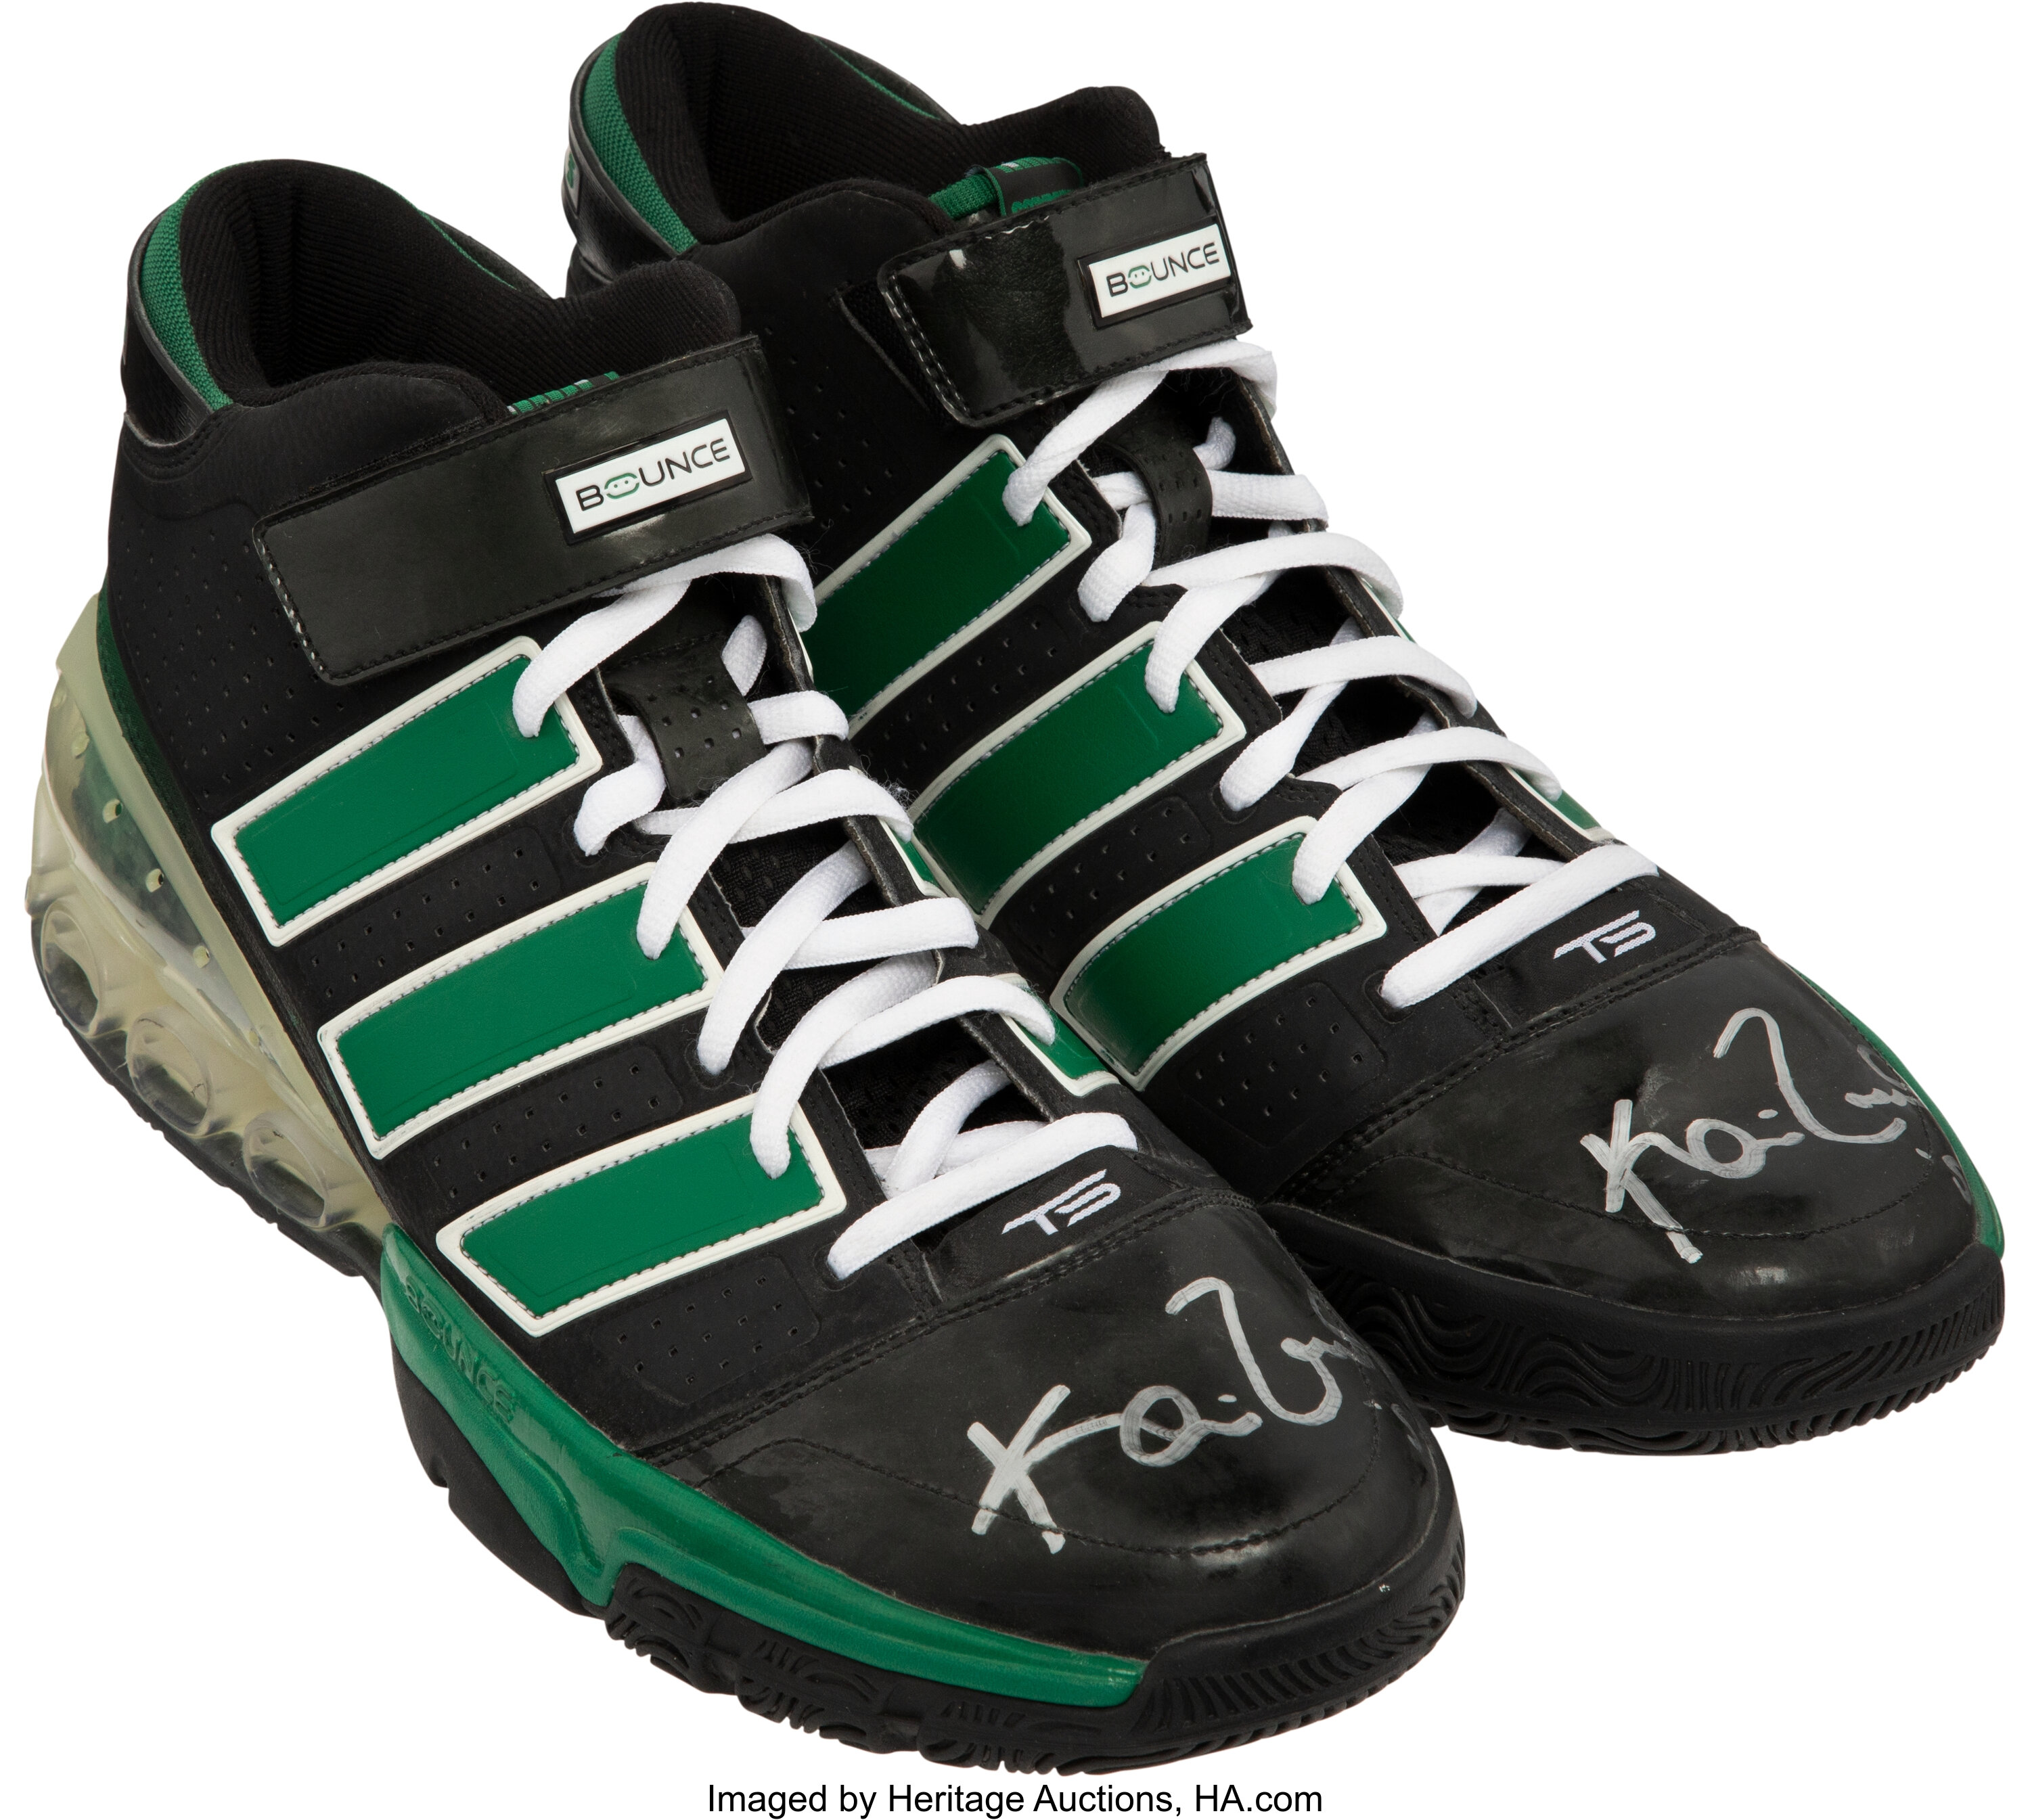 2009-10 Kevin Garnett Game Worn & Signed Boston Celtics | Lot | Heritage Auctions